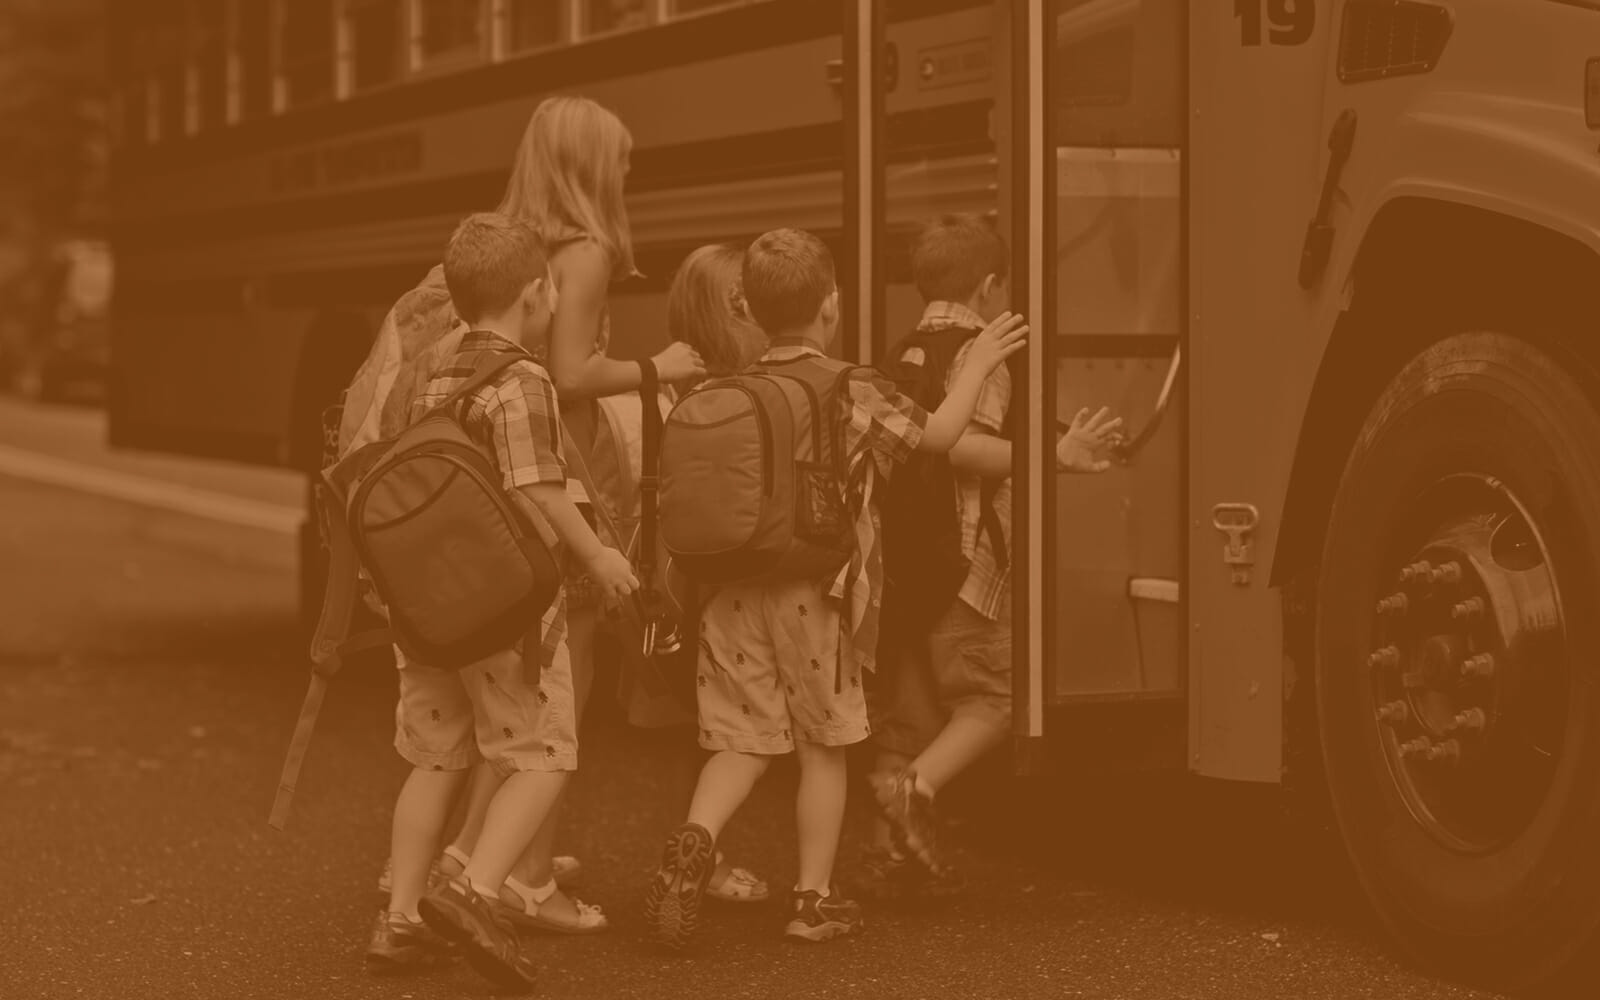 children getting onto a school bus, school bus safety